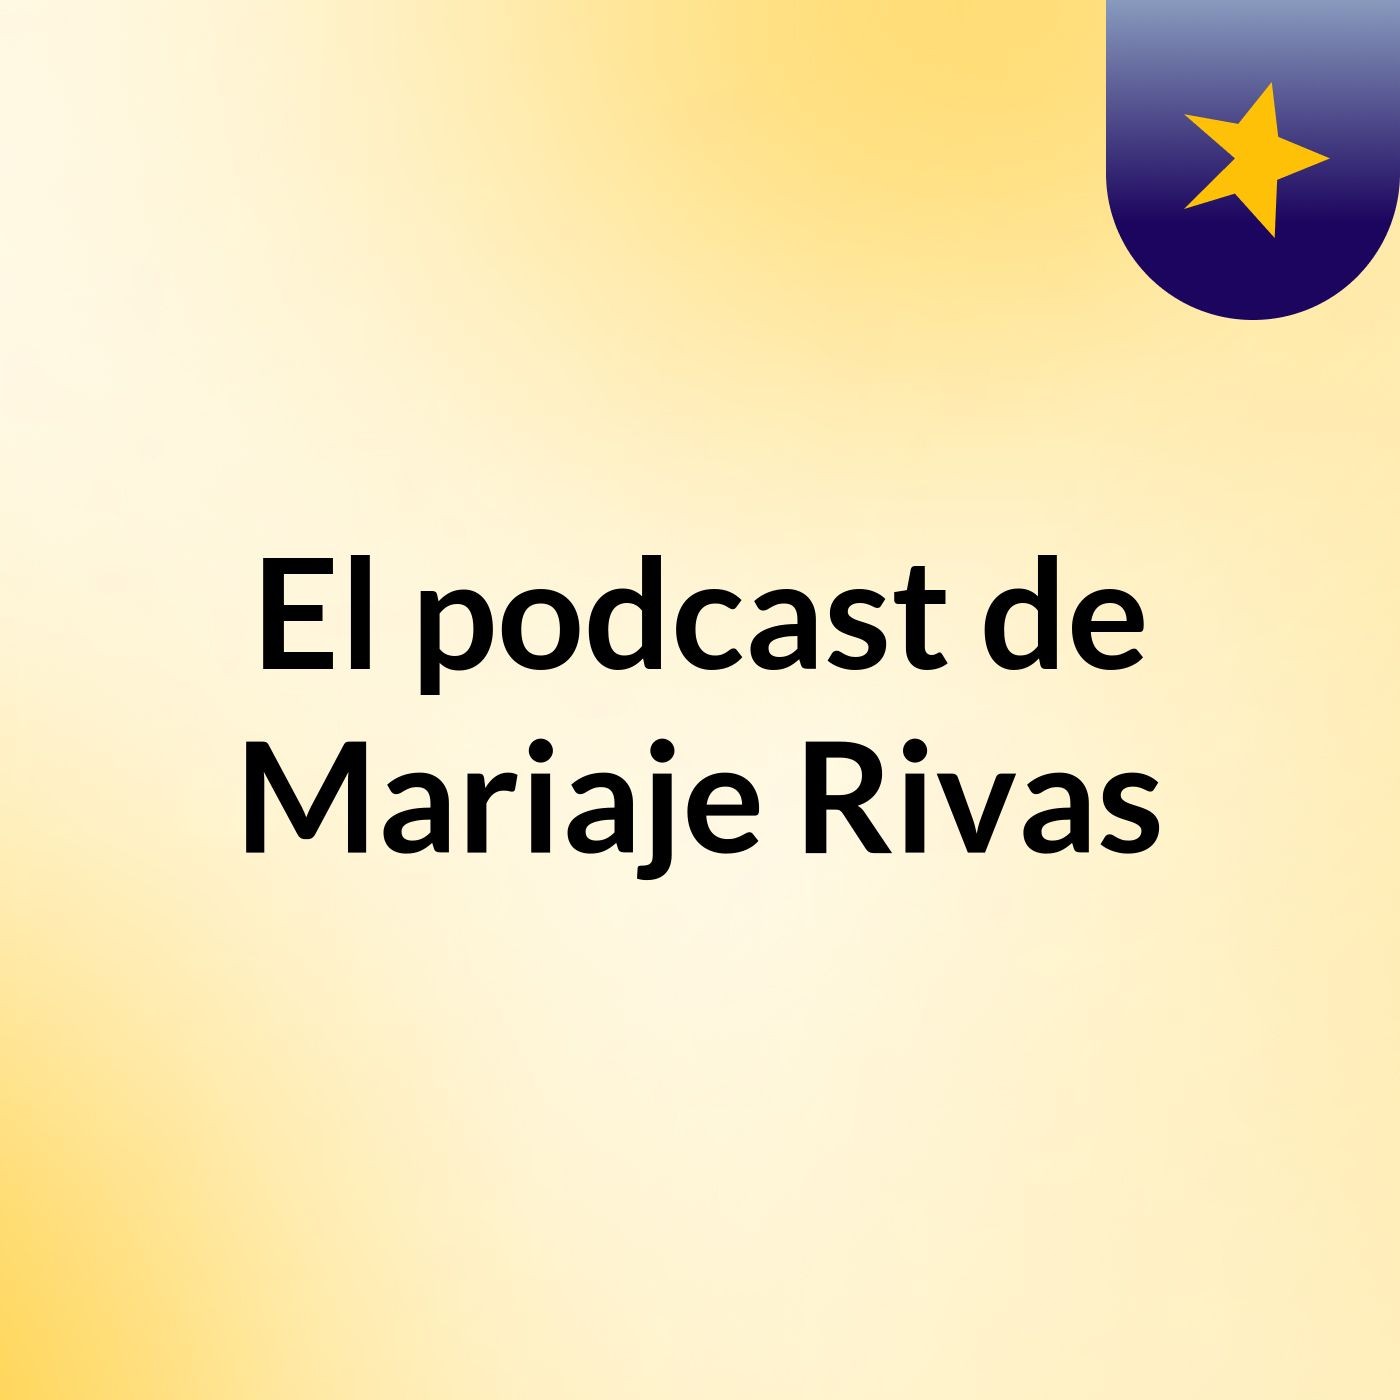 El podcast de Mariaje Rivas